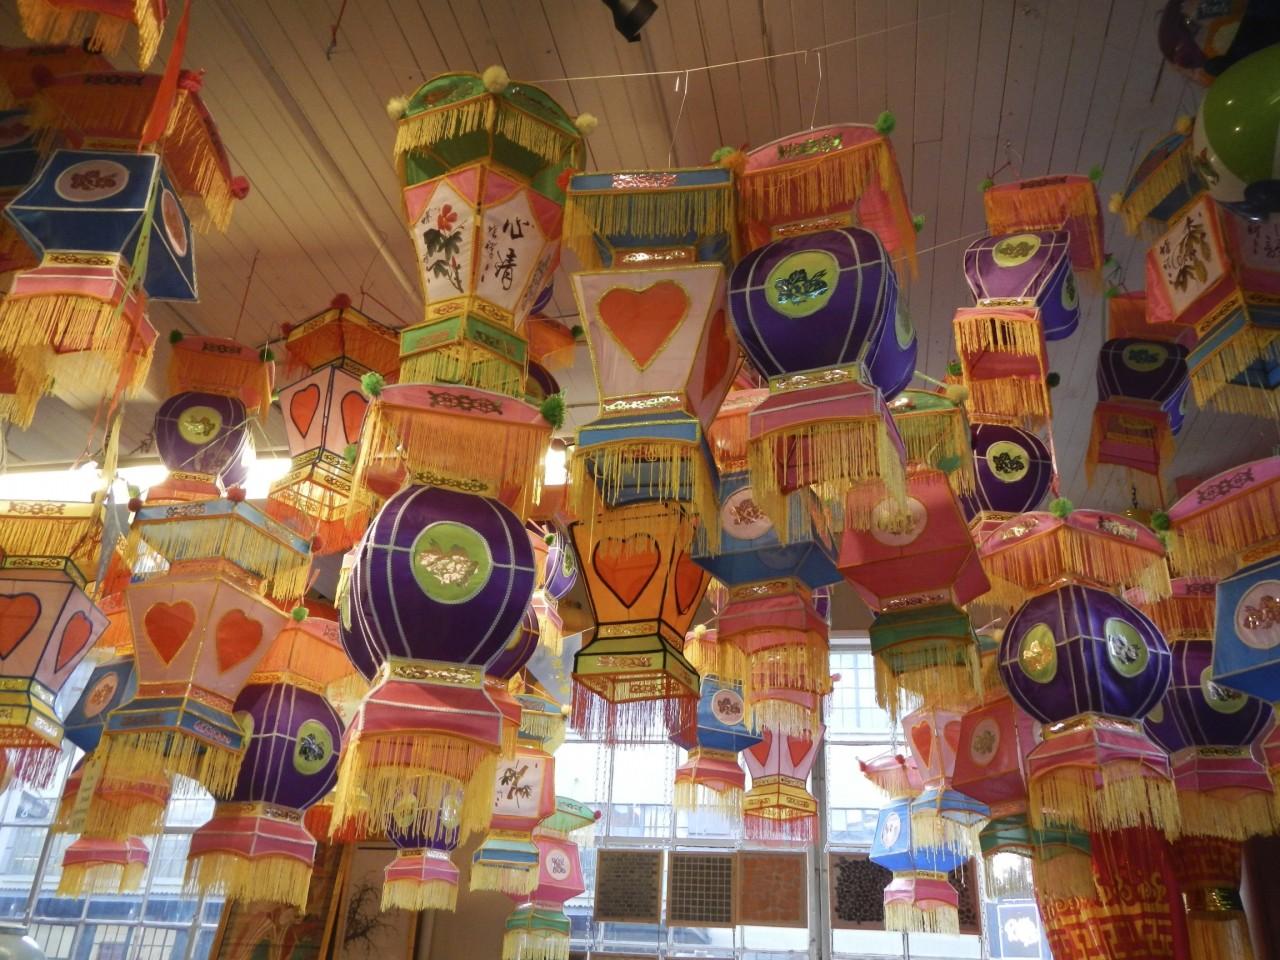 Lanterns in a Portland store